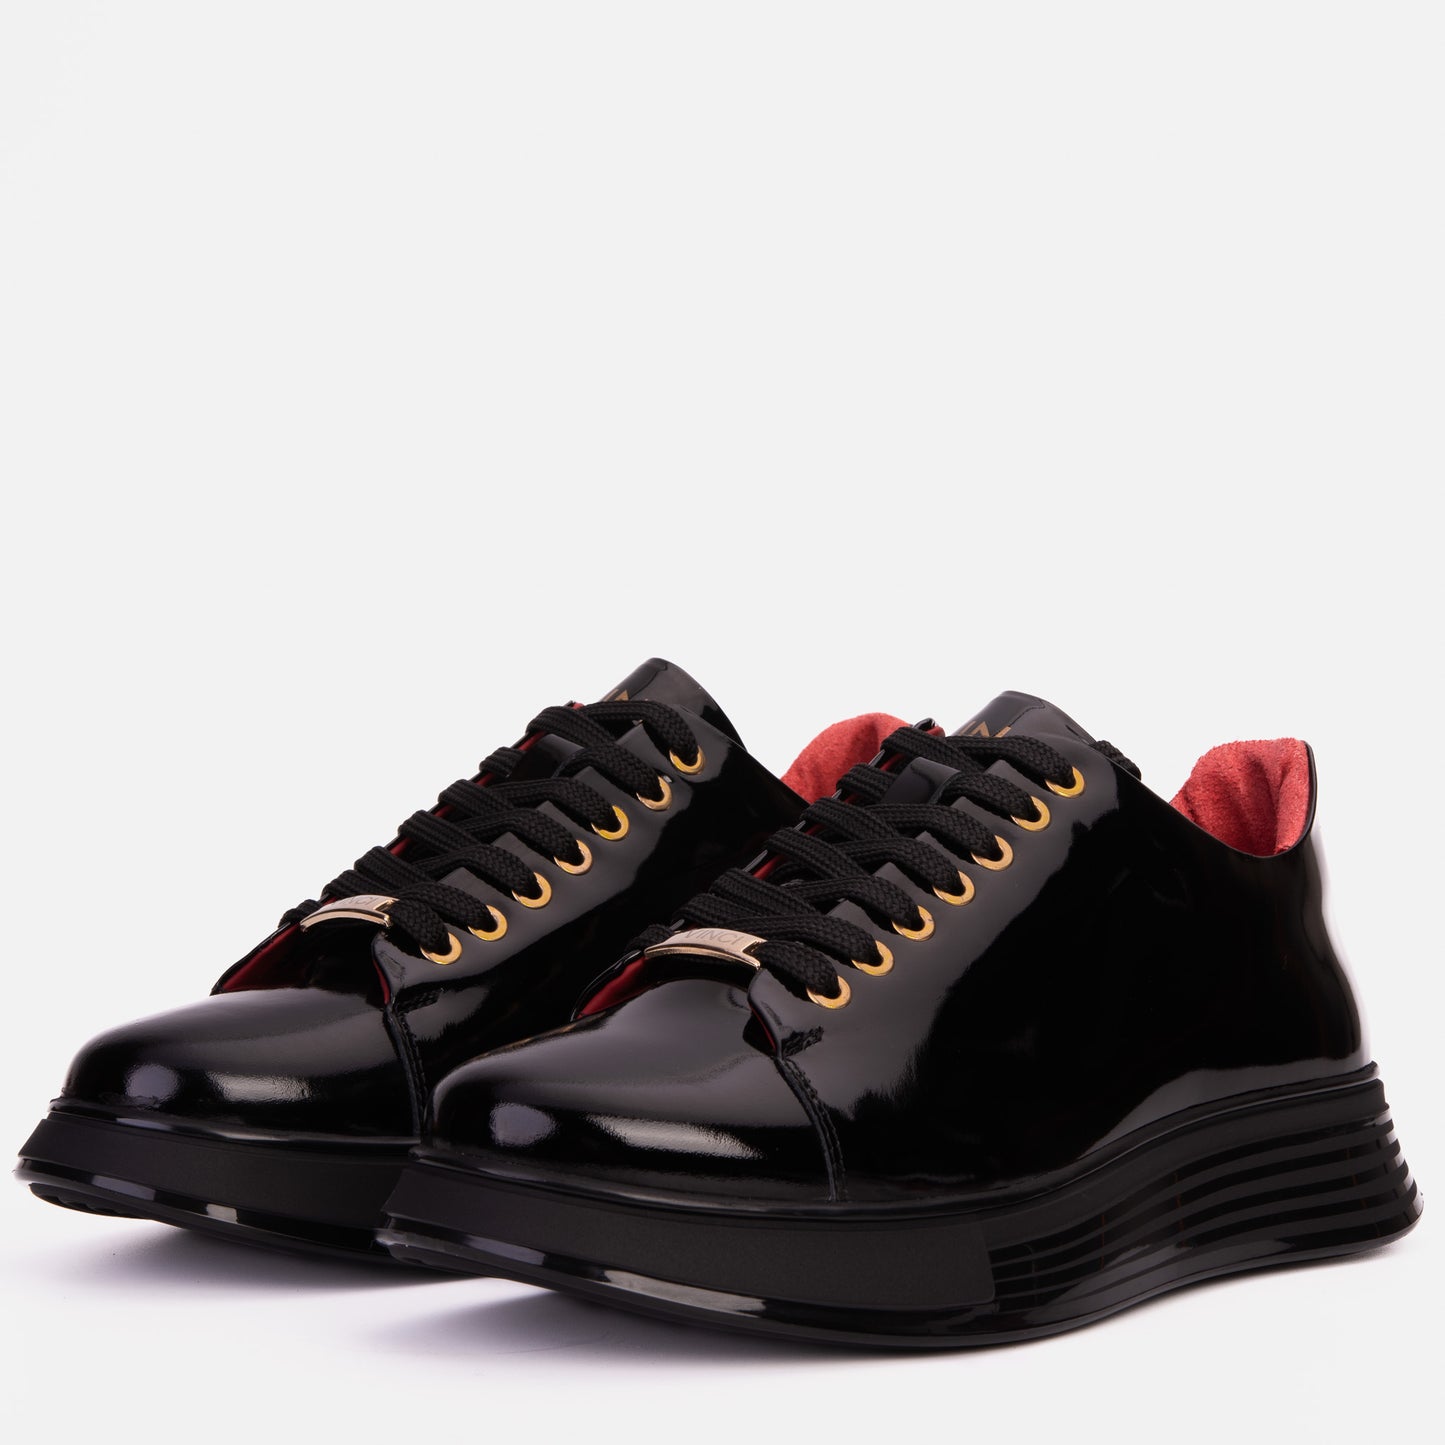 The Peklin Patent Black Leather Men Sneaker